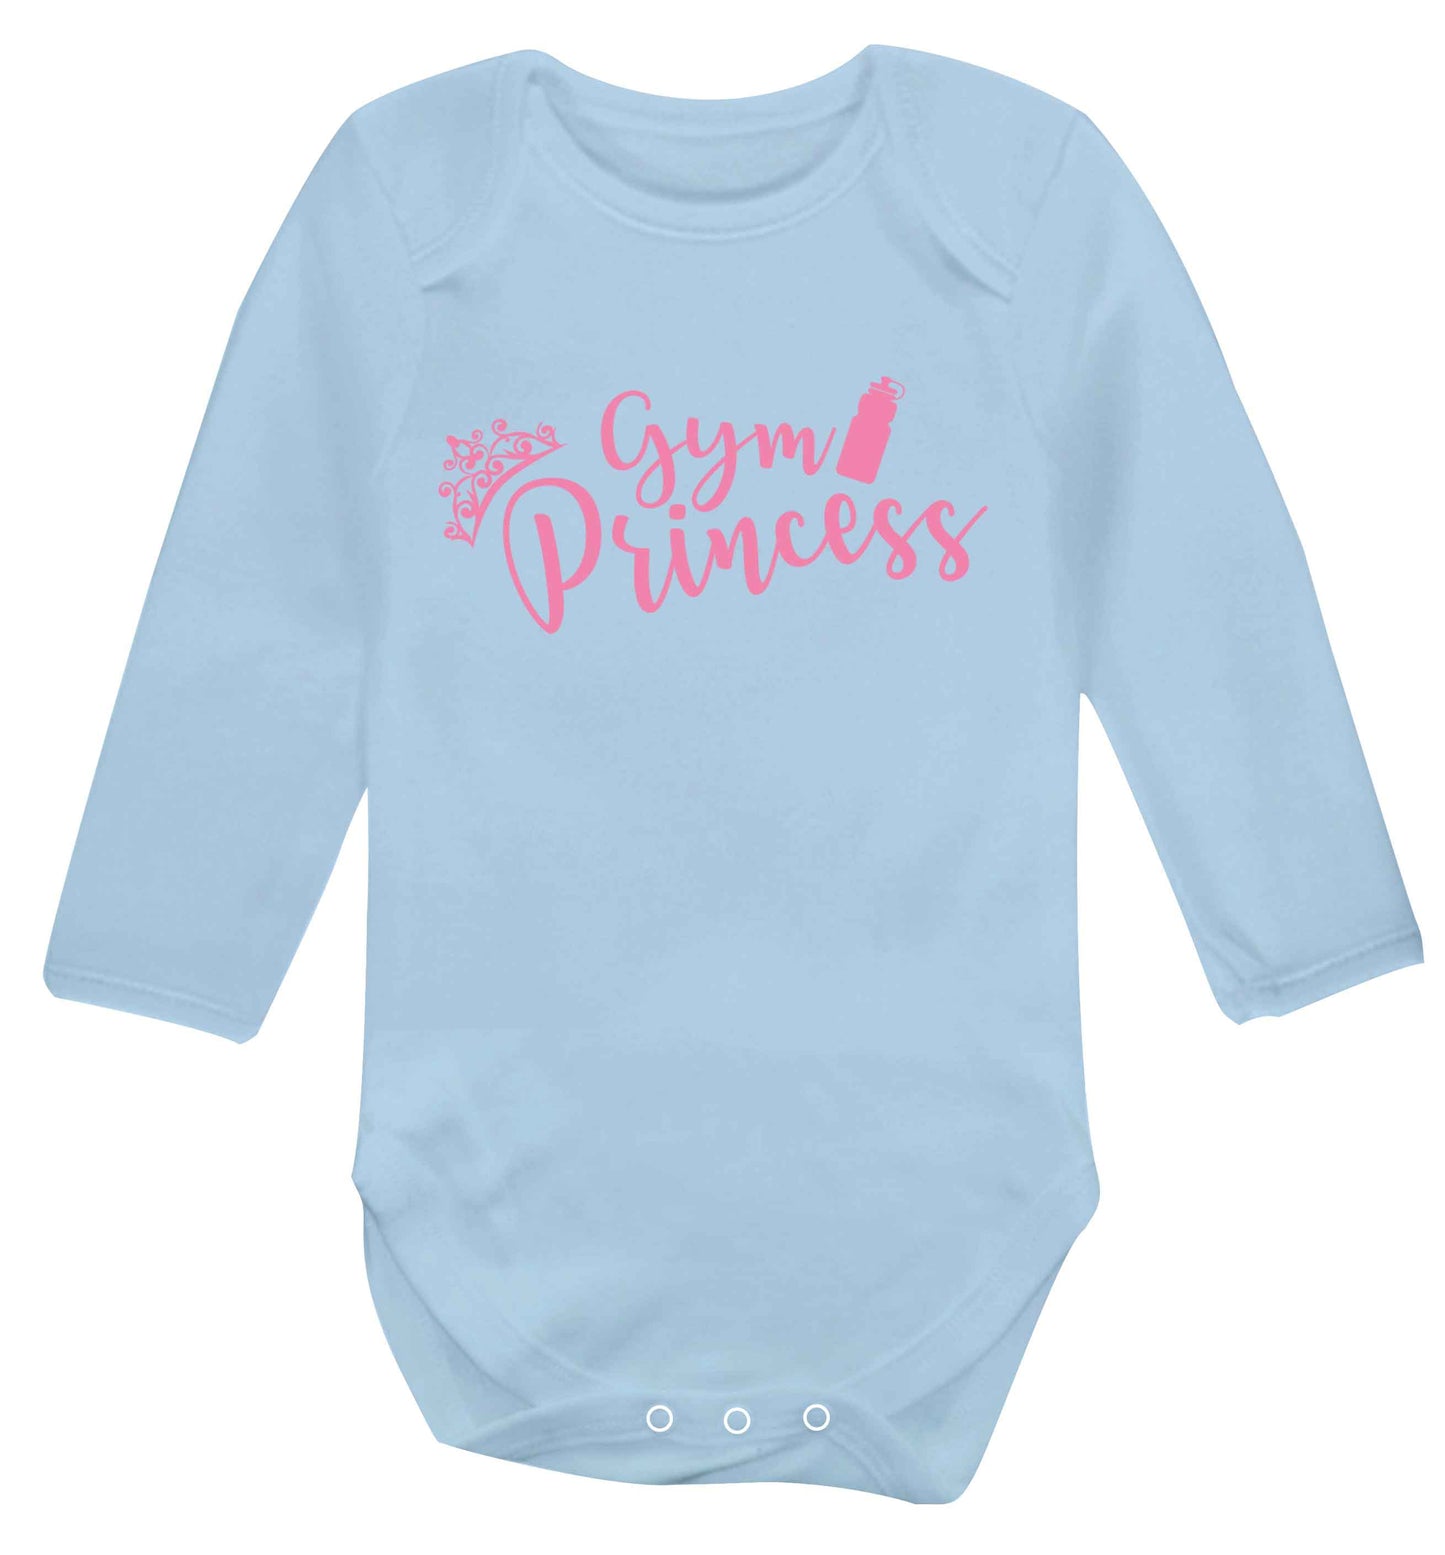 Gym princess Baby Vest long sleeved pale blue 6-12 months